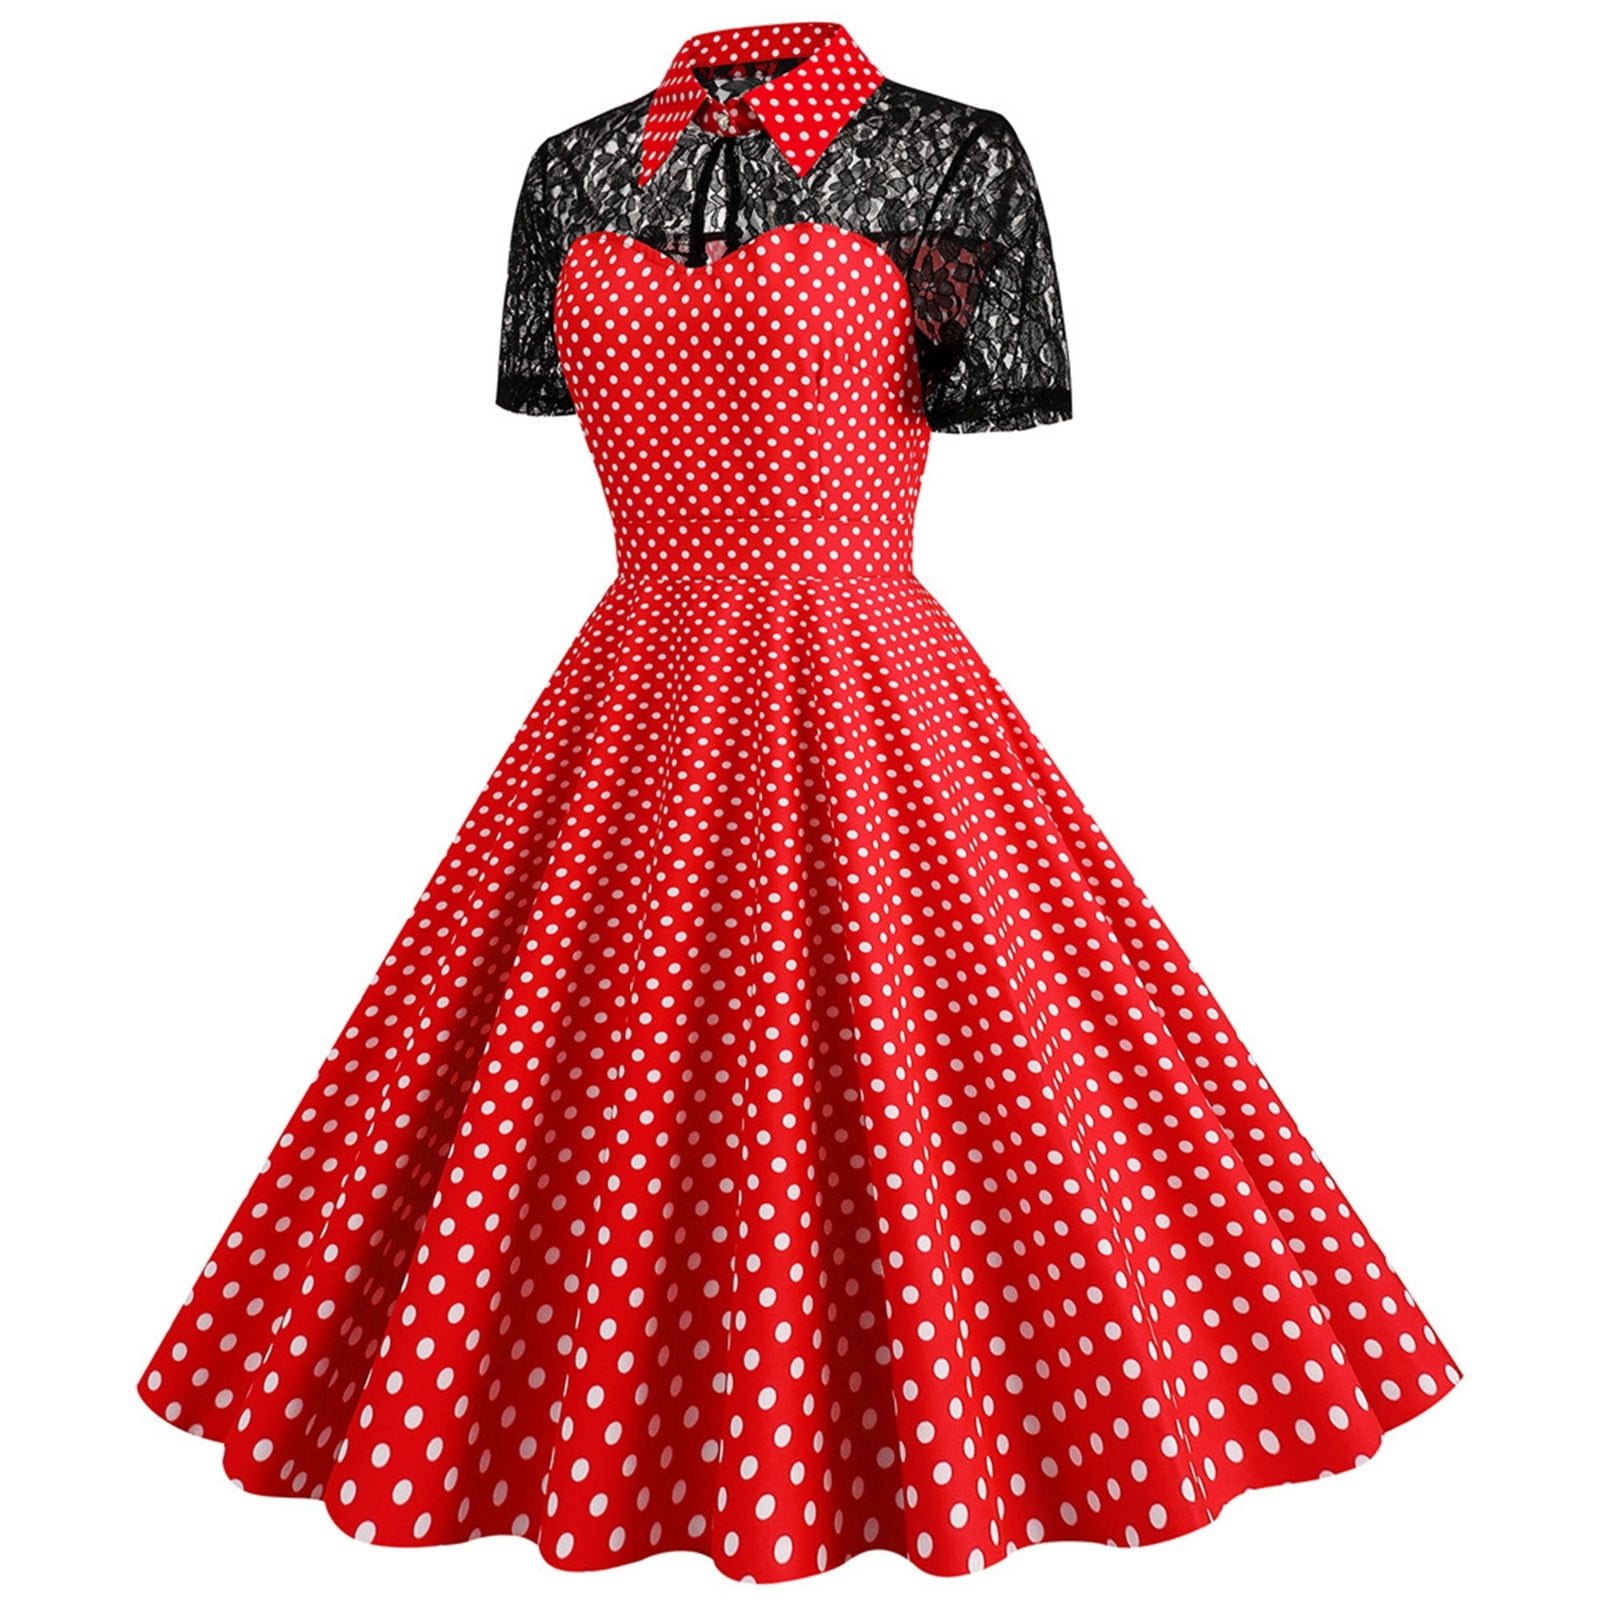 Aboser Vintage Swing Dress for Women A-Line Party Dresses Polka Dot ...